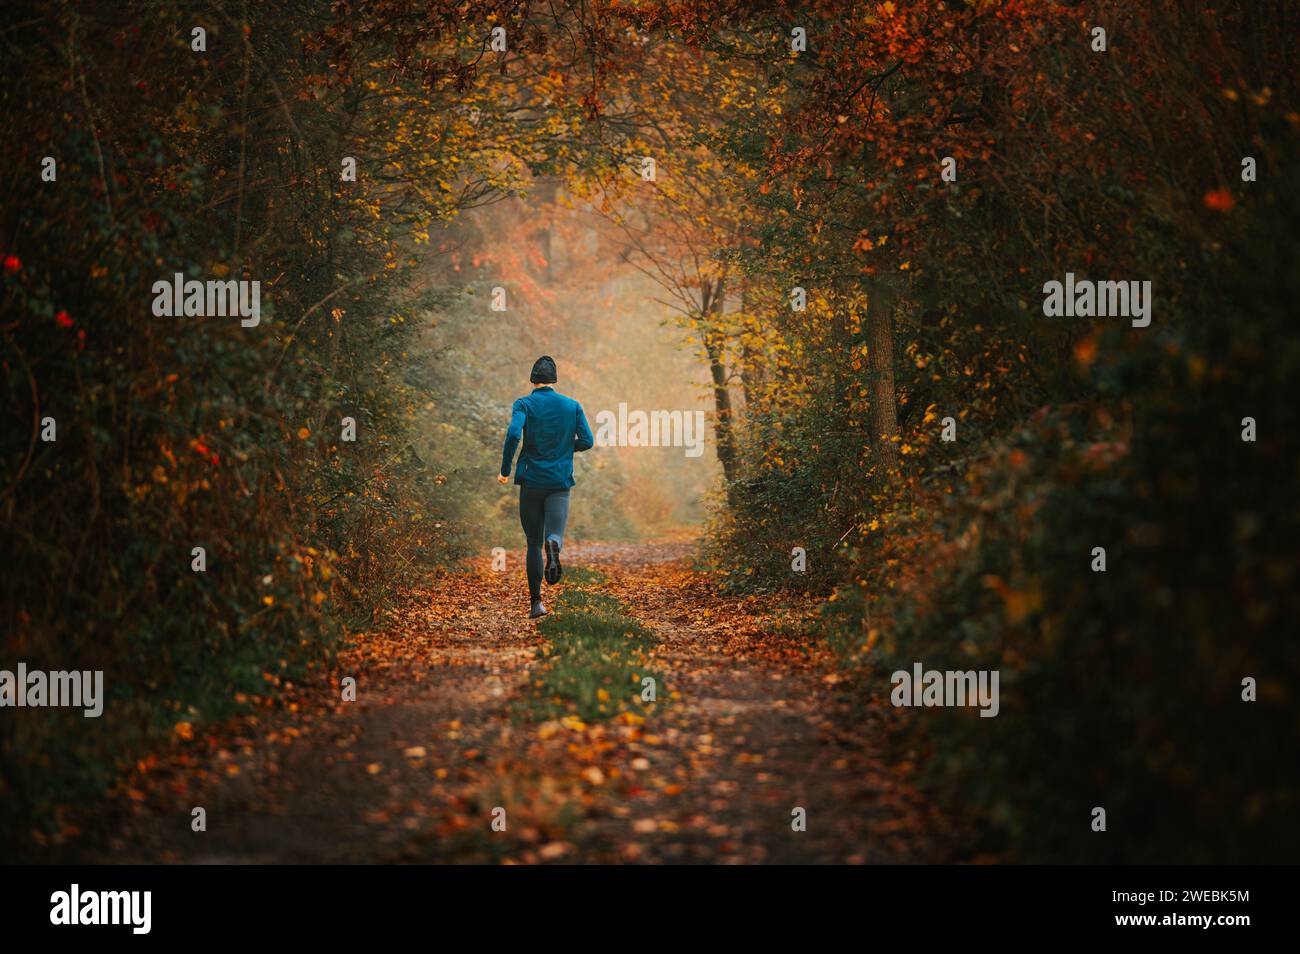 Young Runner Stürmt Durch Farbenfrohe Fog-Laden-Trails Stockfoto